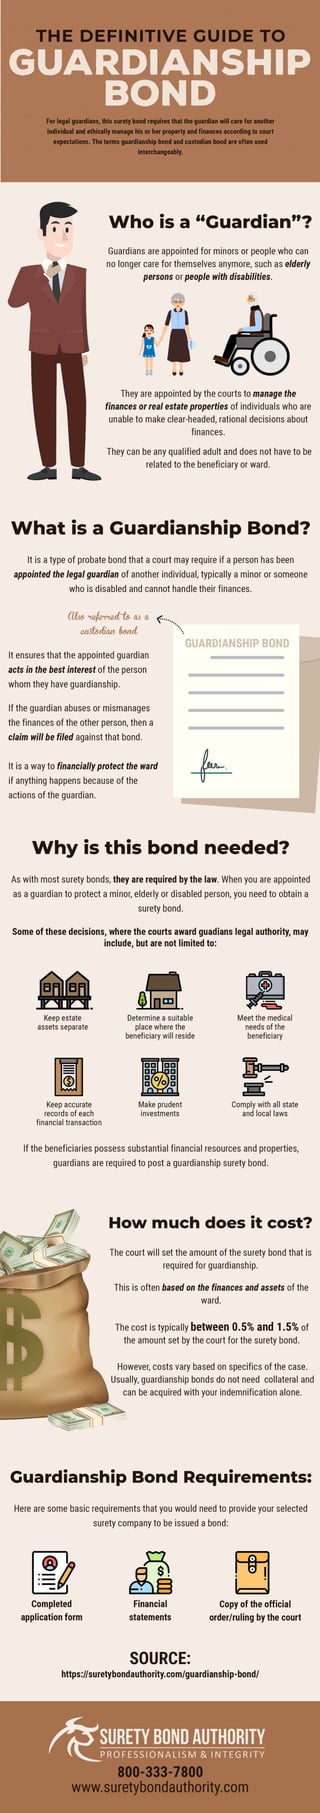 The Definitive Guide to Guardianship Bonds